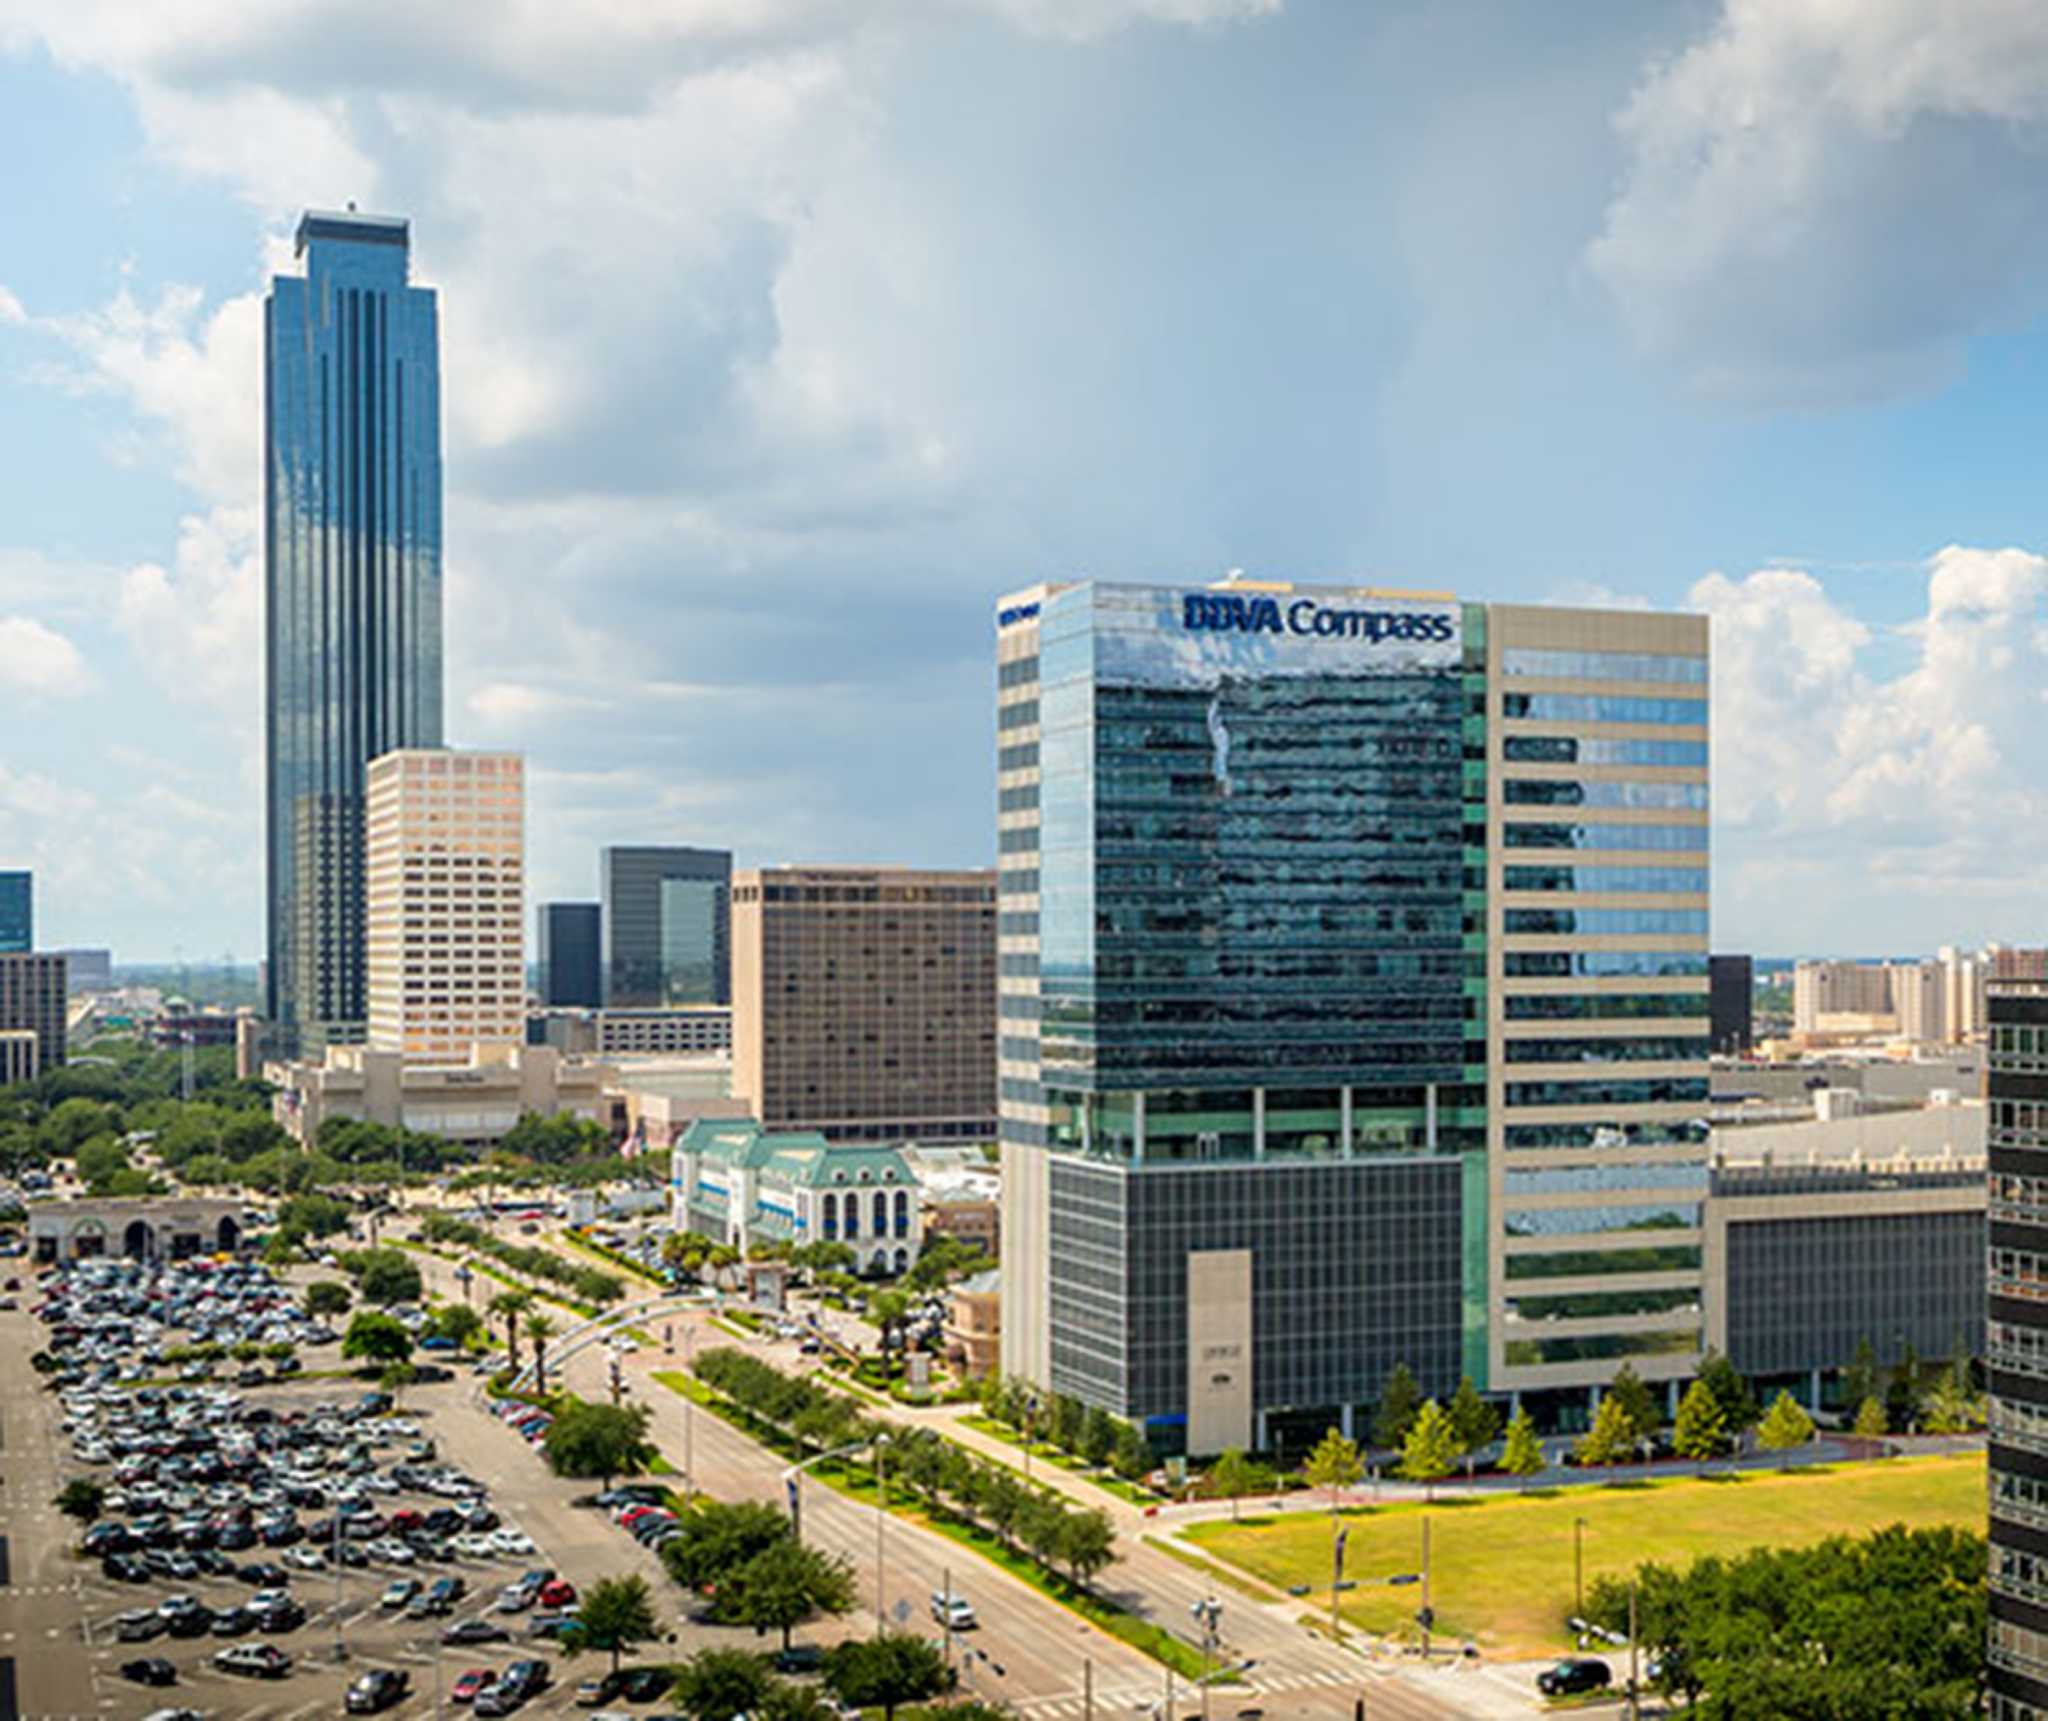 Houston buildings score high on green index - Houston Chronicle